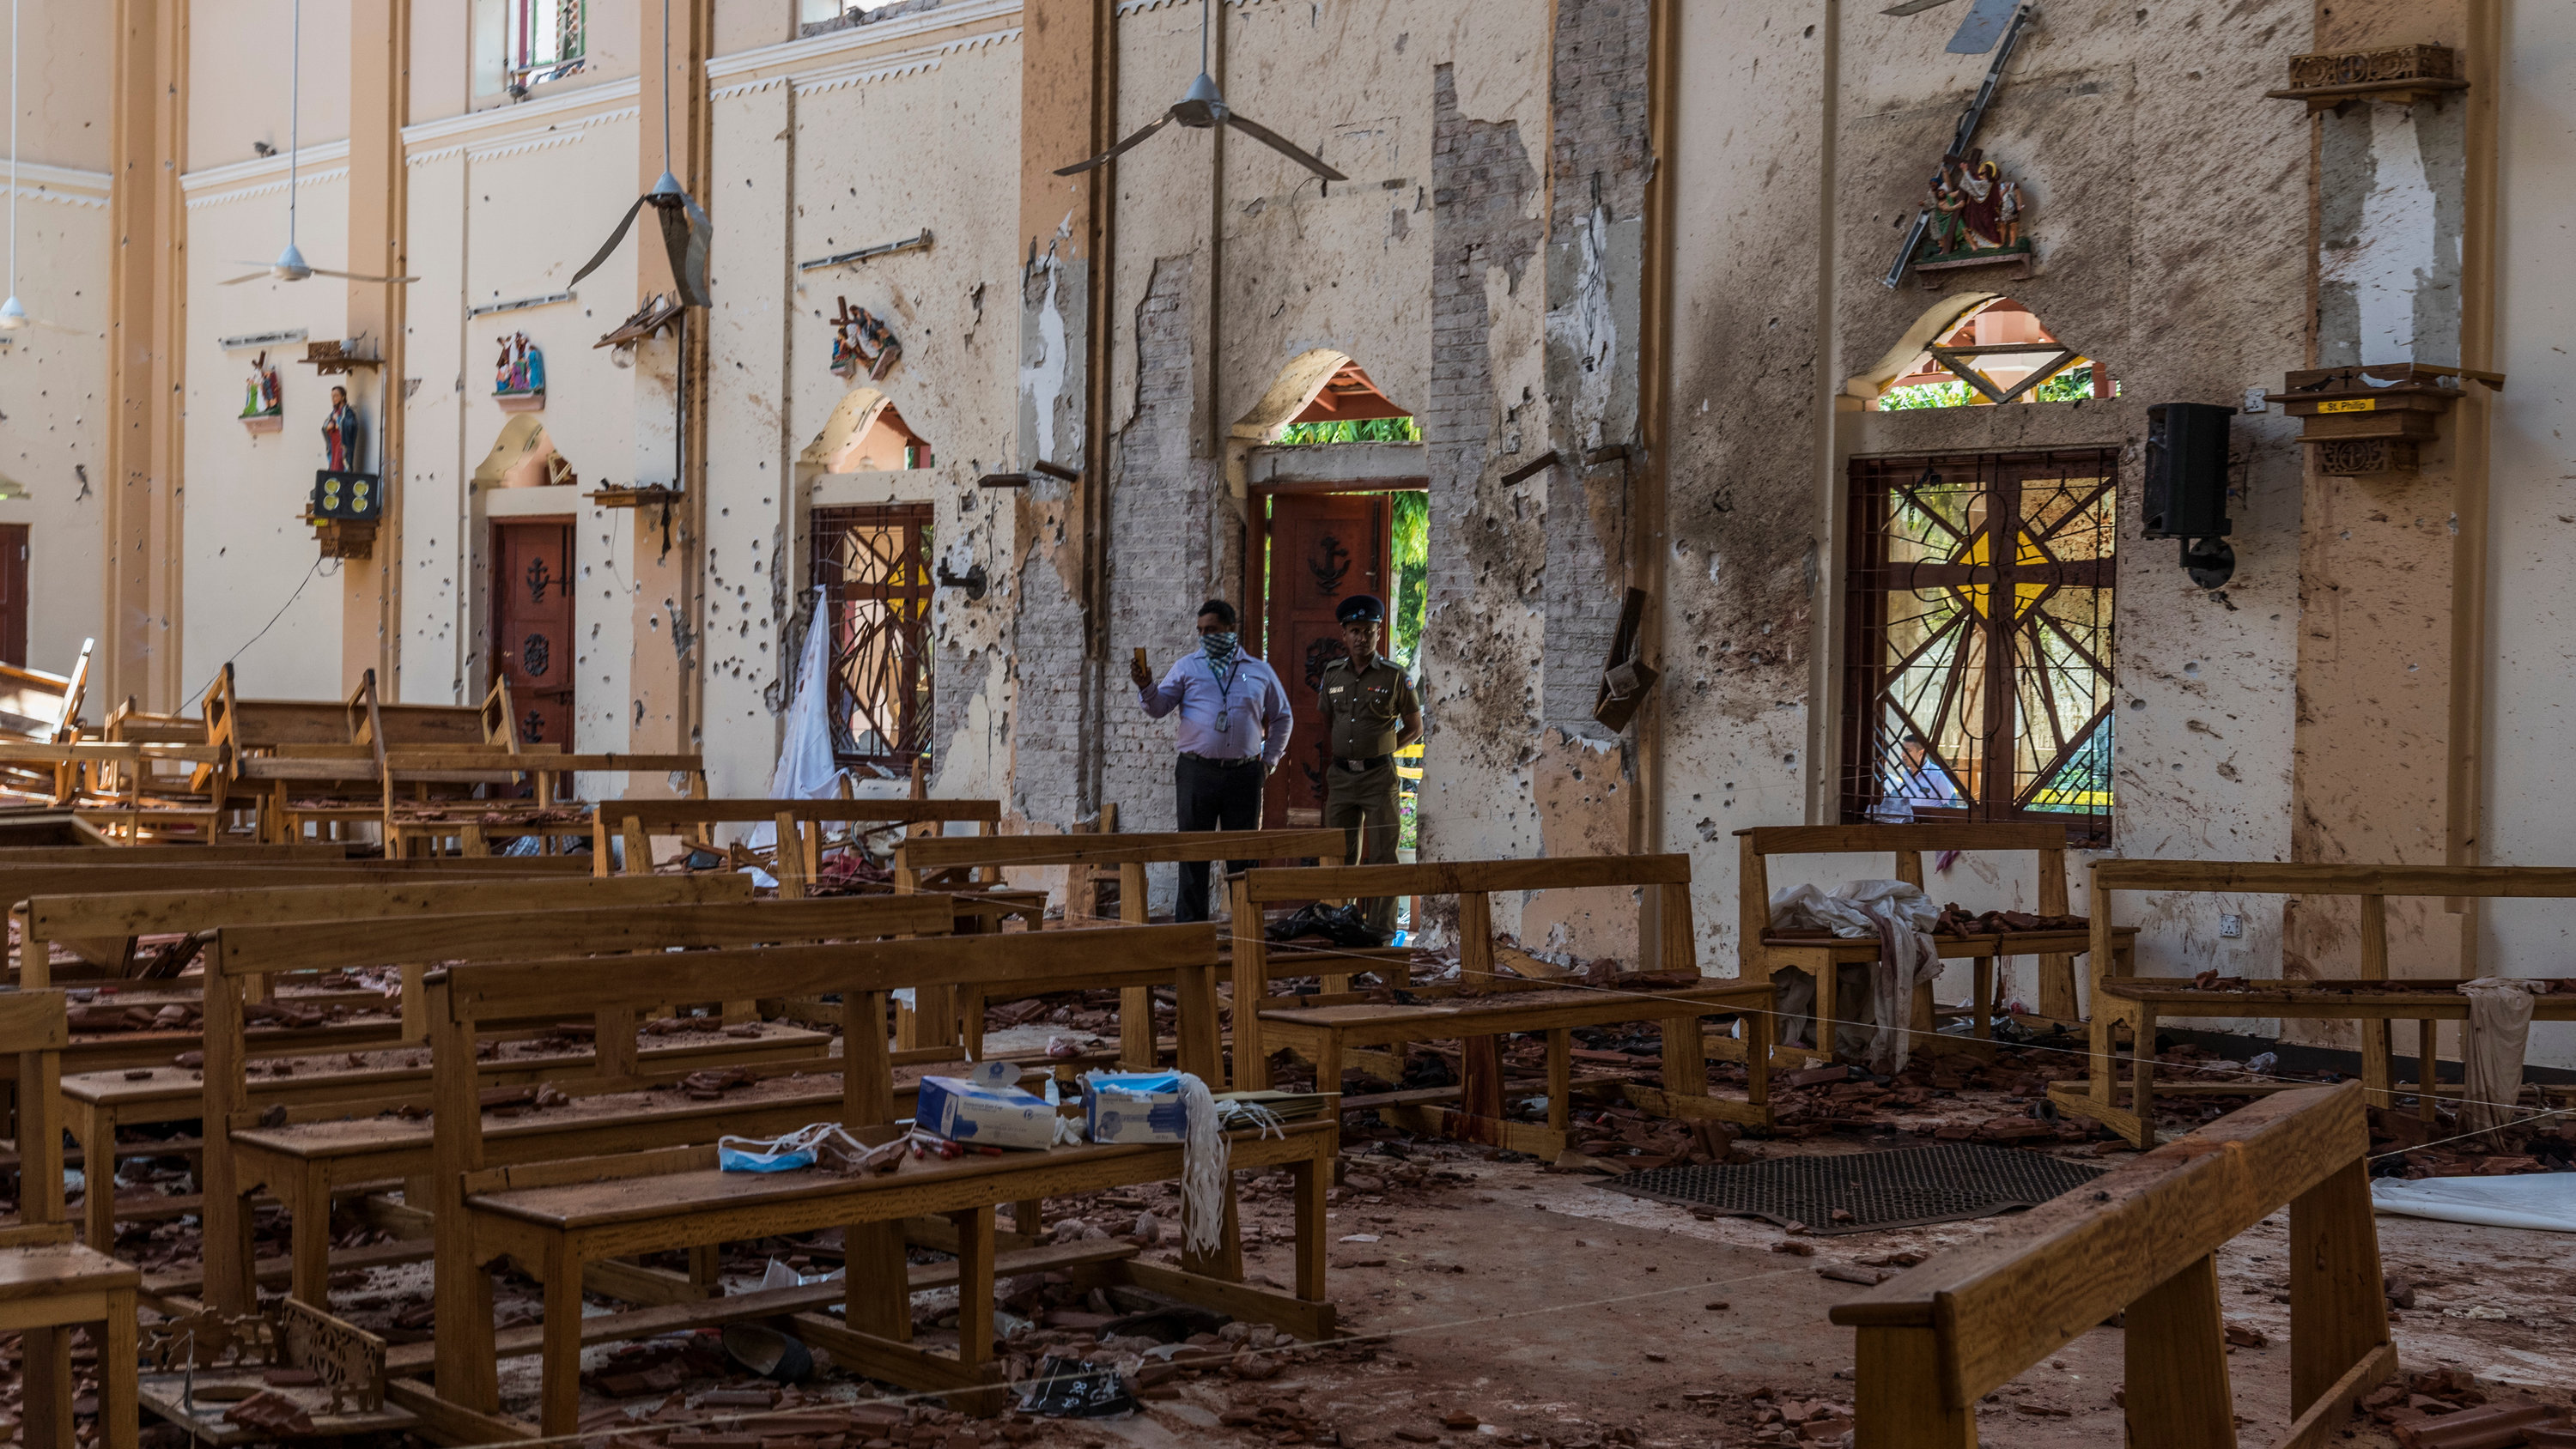 Sri Lanka tourism limps back after bombings, figures show